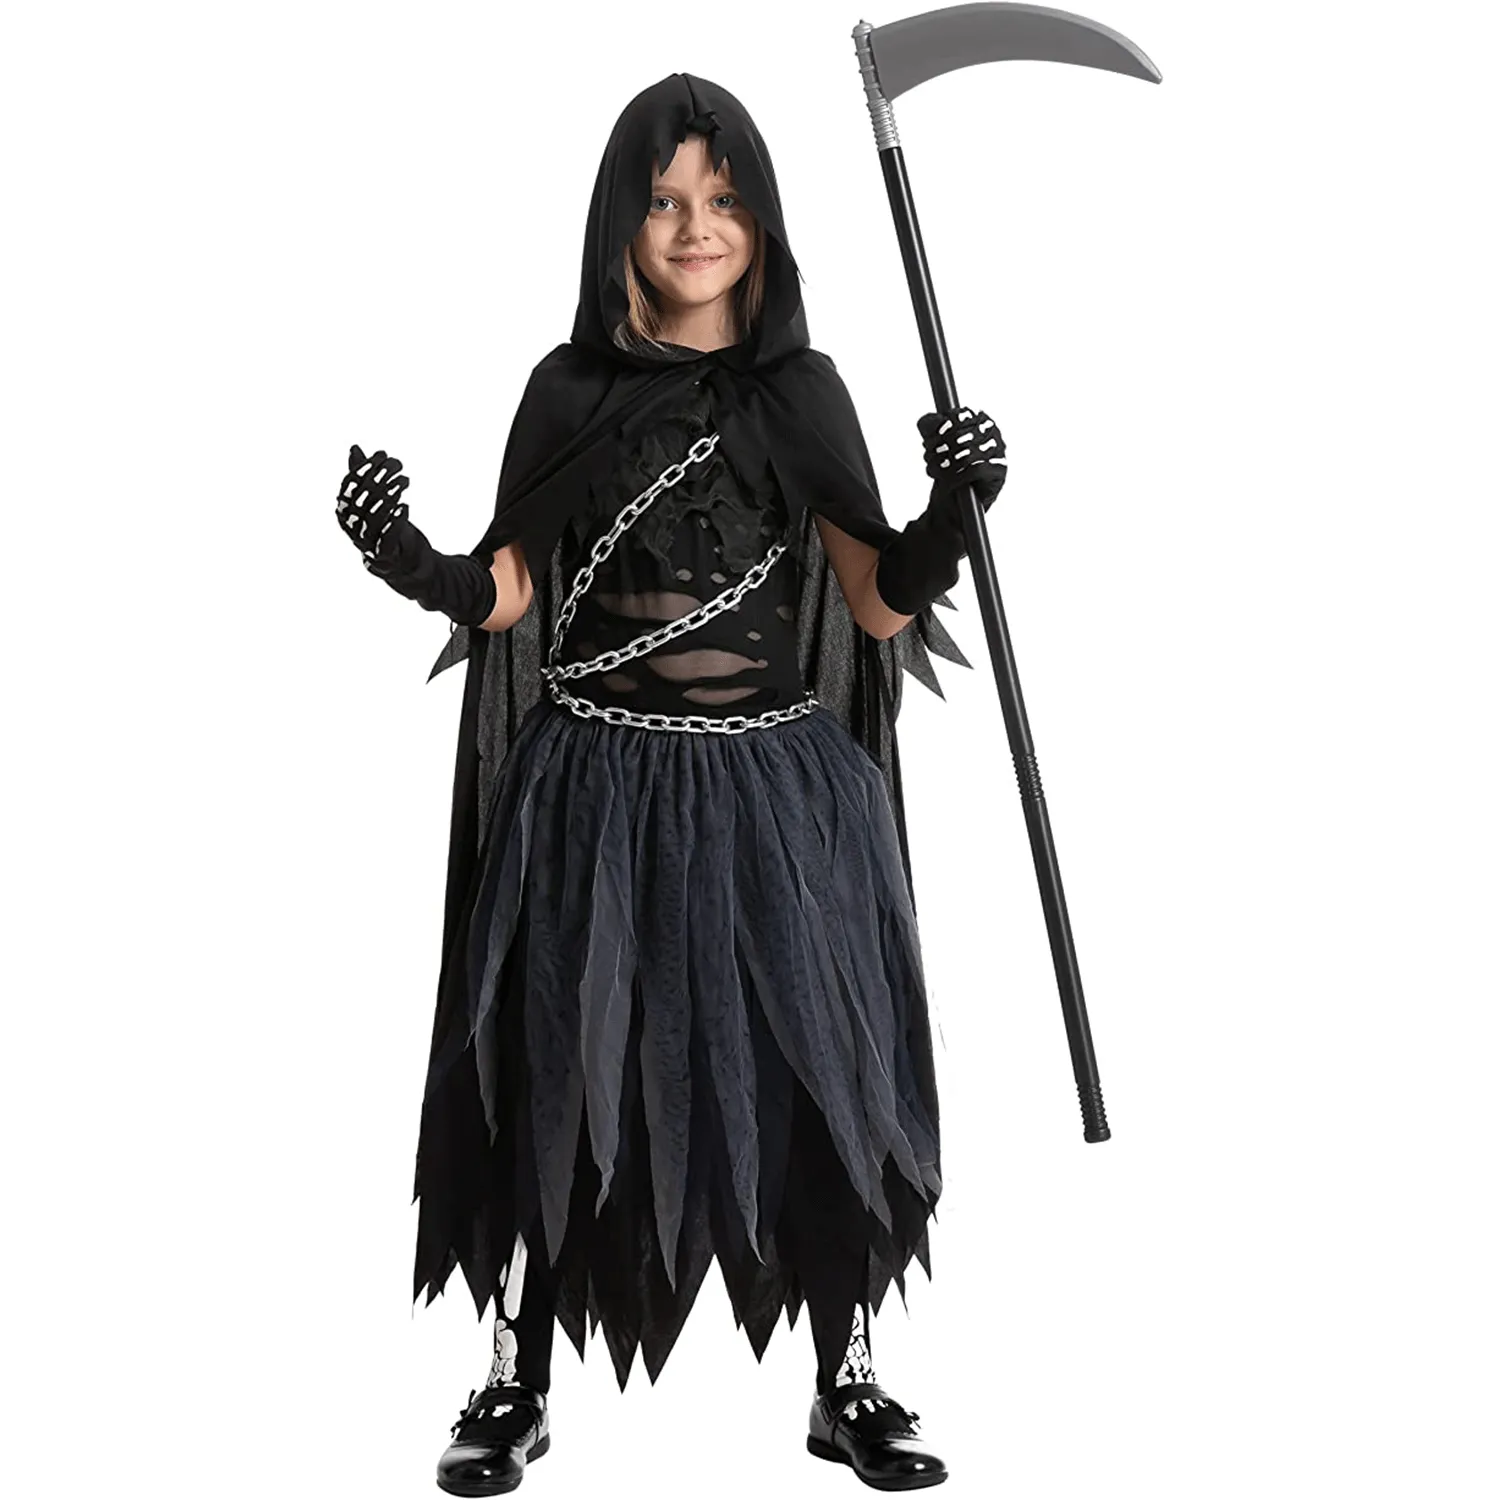 grim reaper costume realistic